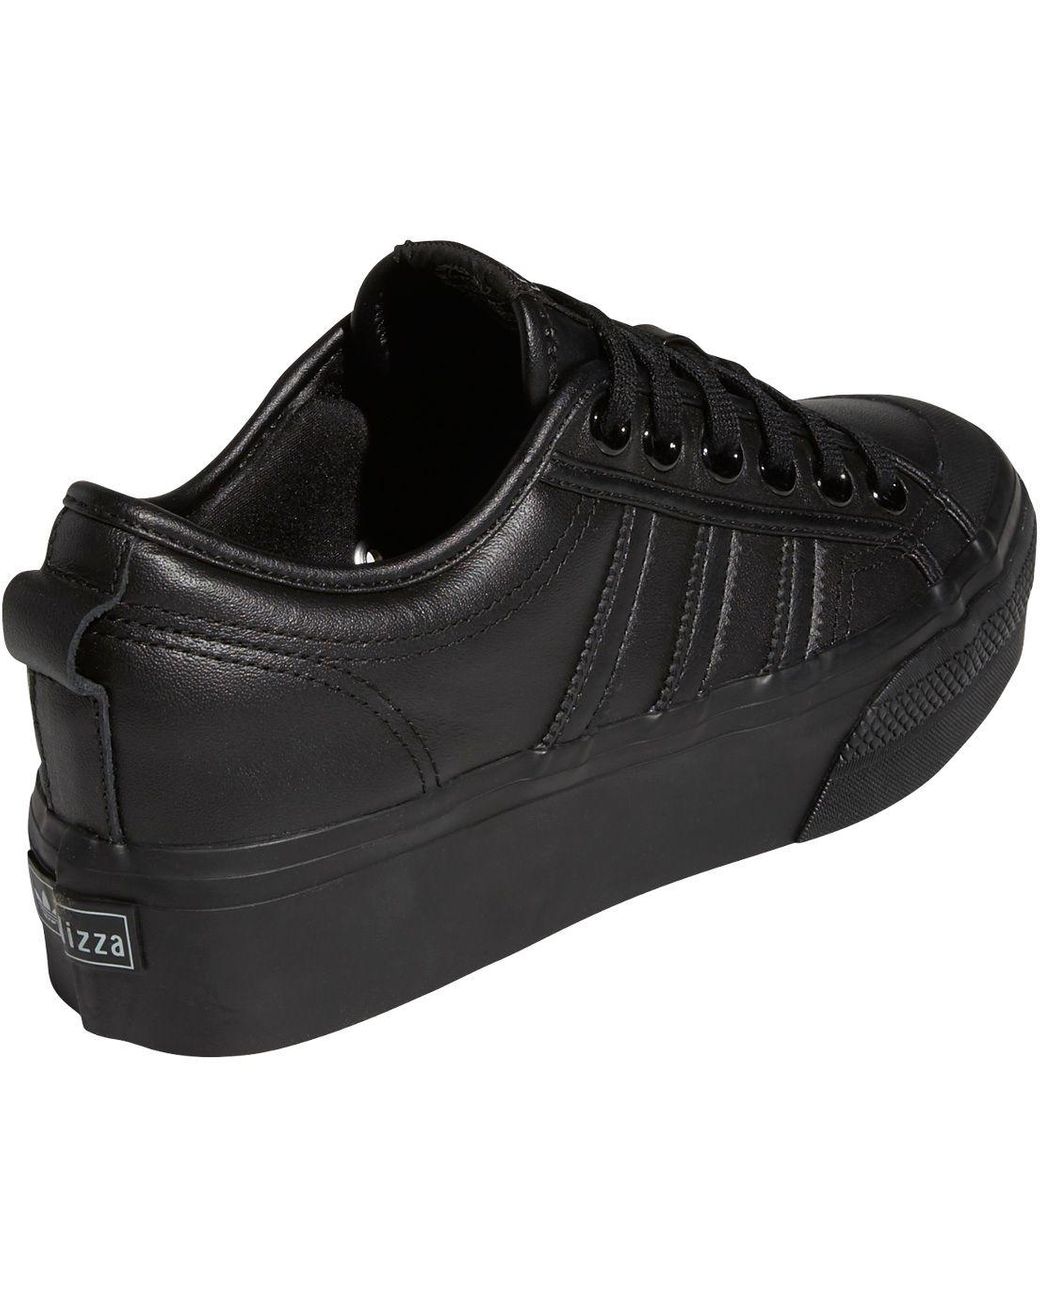 adidas Leather Nizza Platform Sneakers in Black/Black (Black) | Lyst